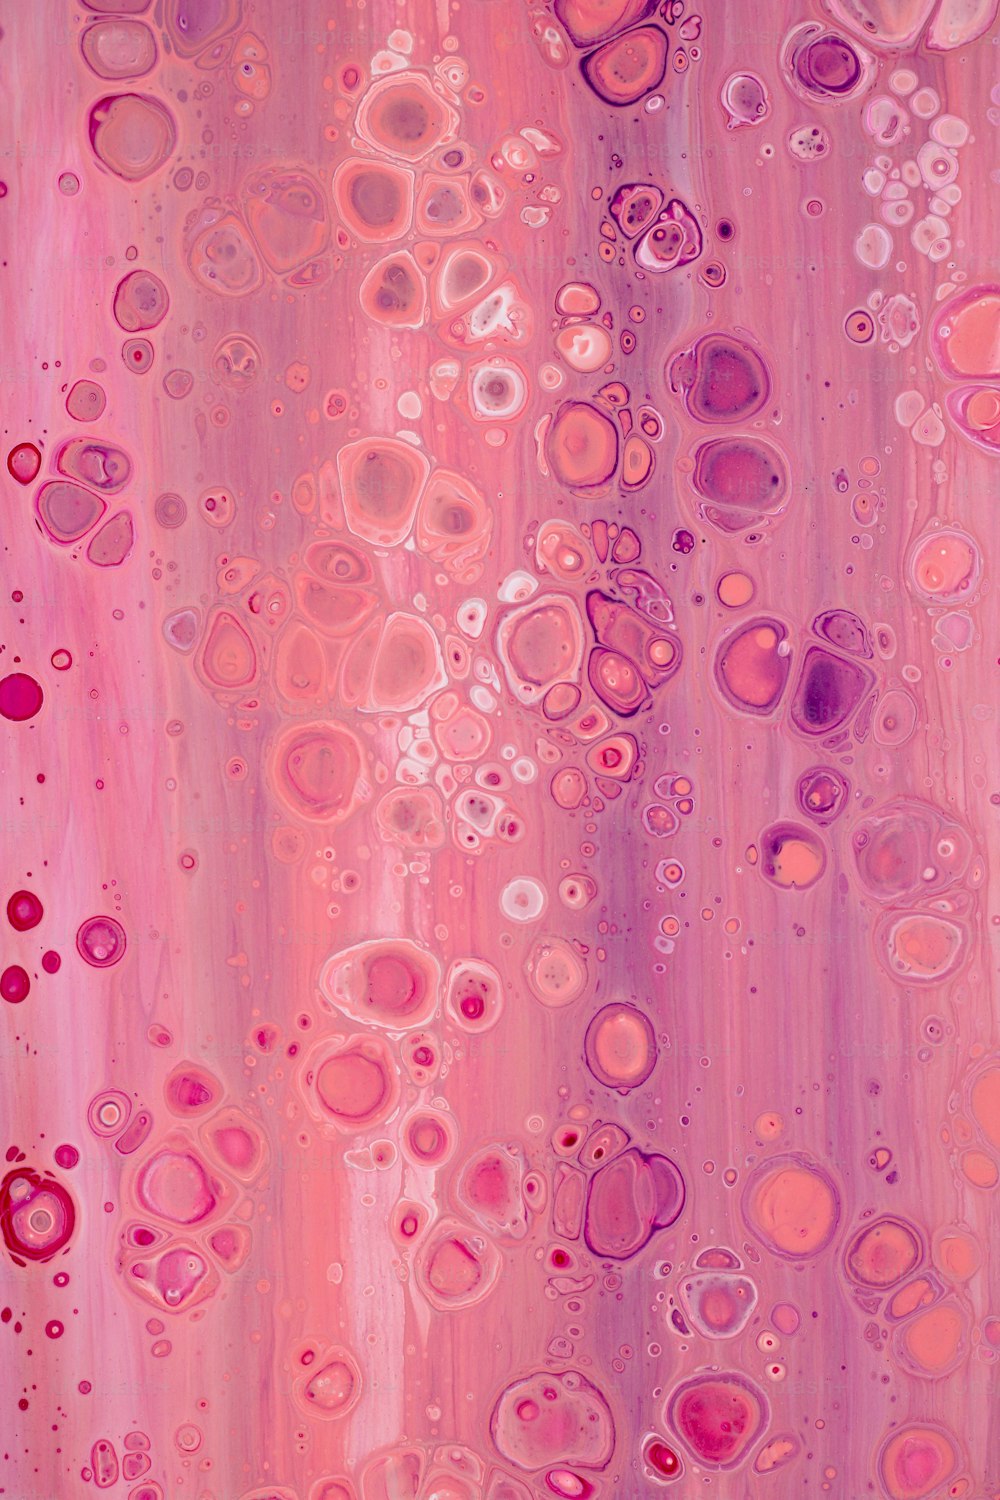 Un primer plano de un fondo rosa con burbujas